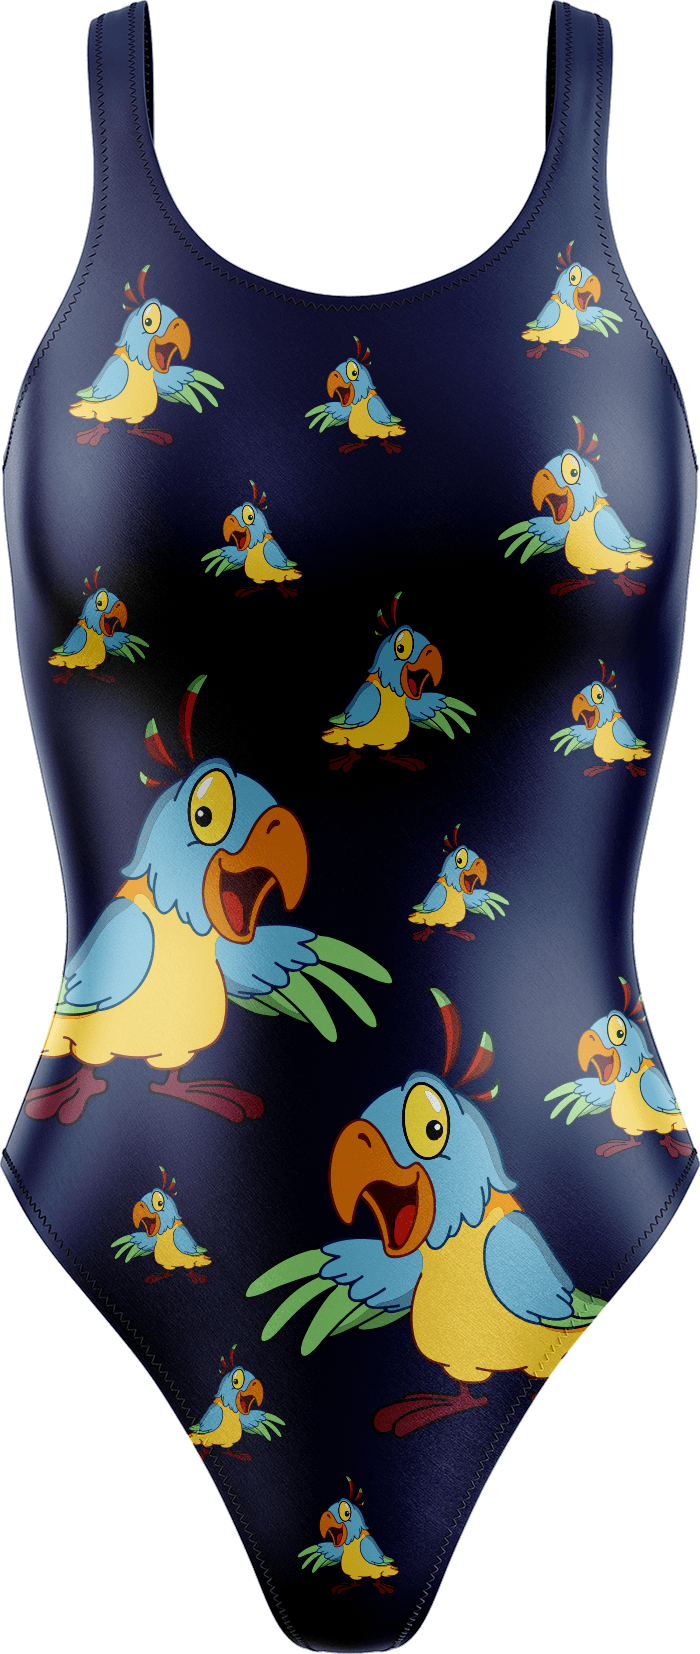 Psycho Parrot Swimsuits - fungear.com.au